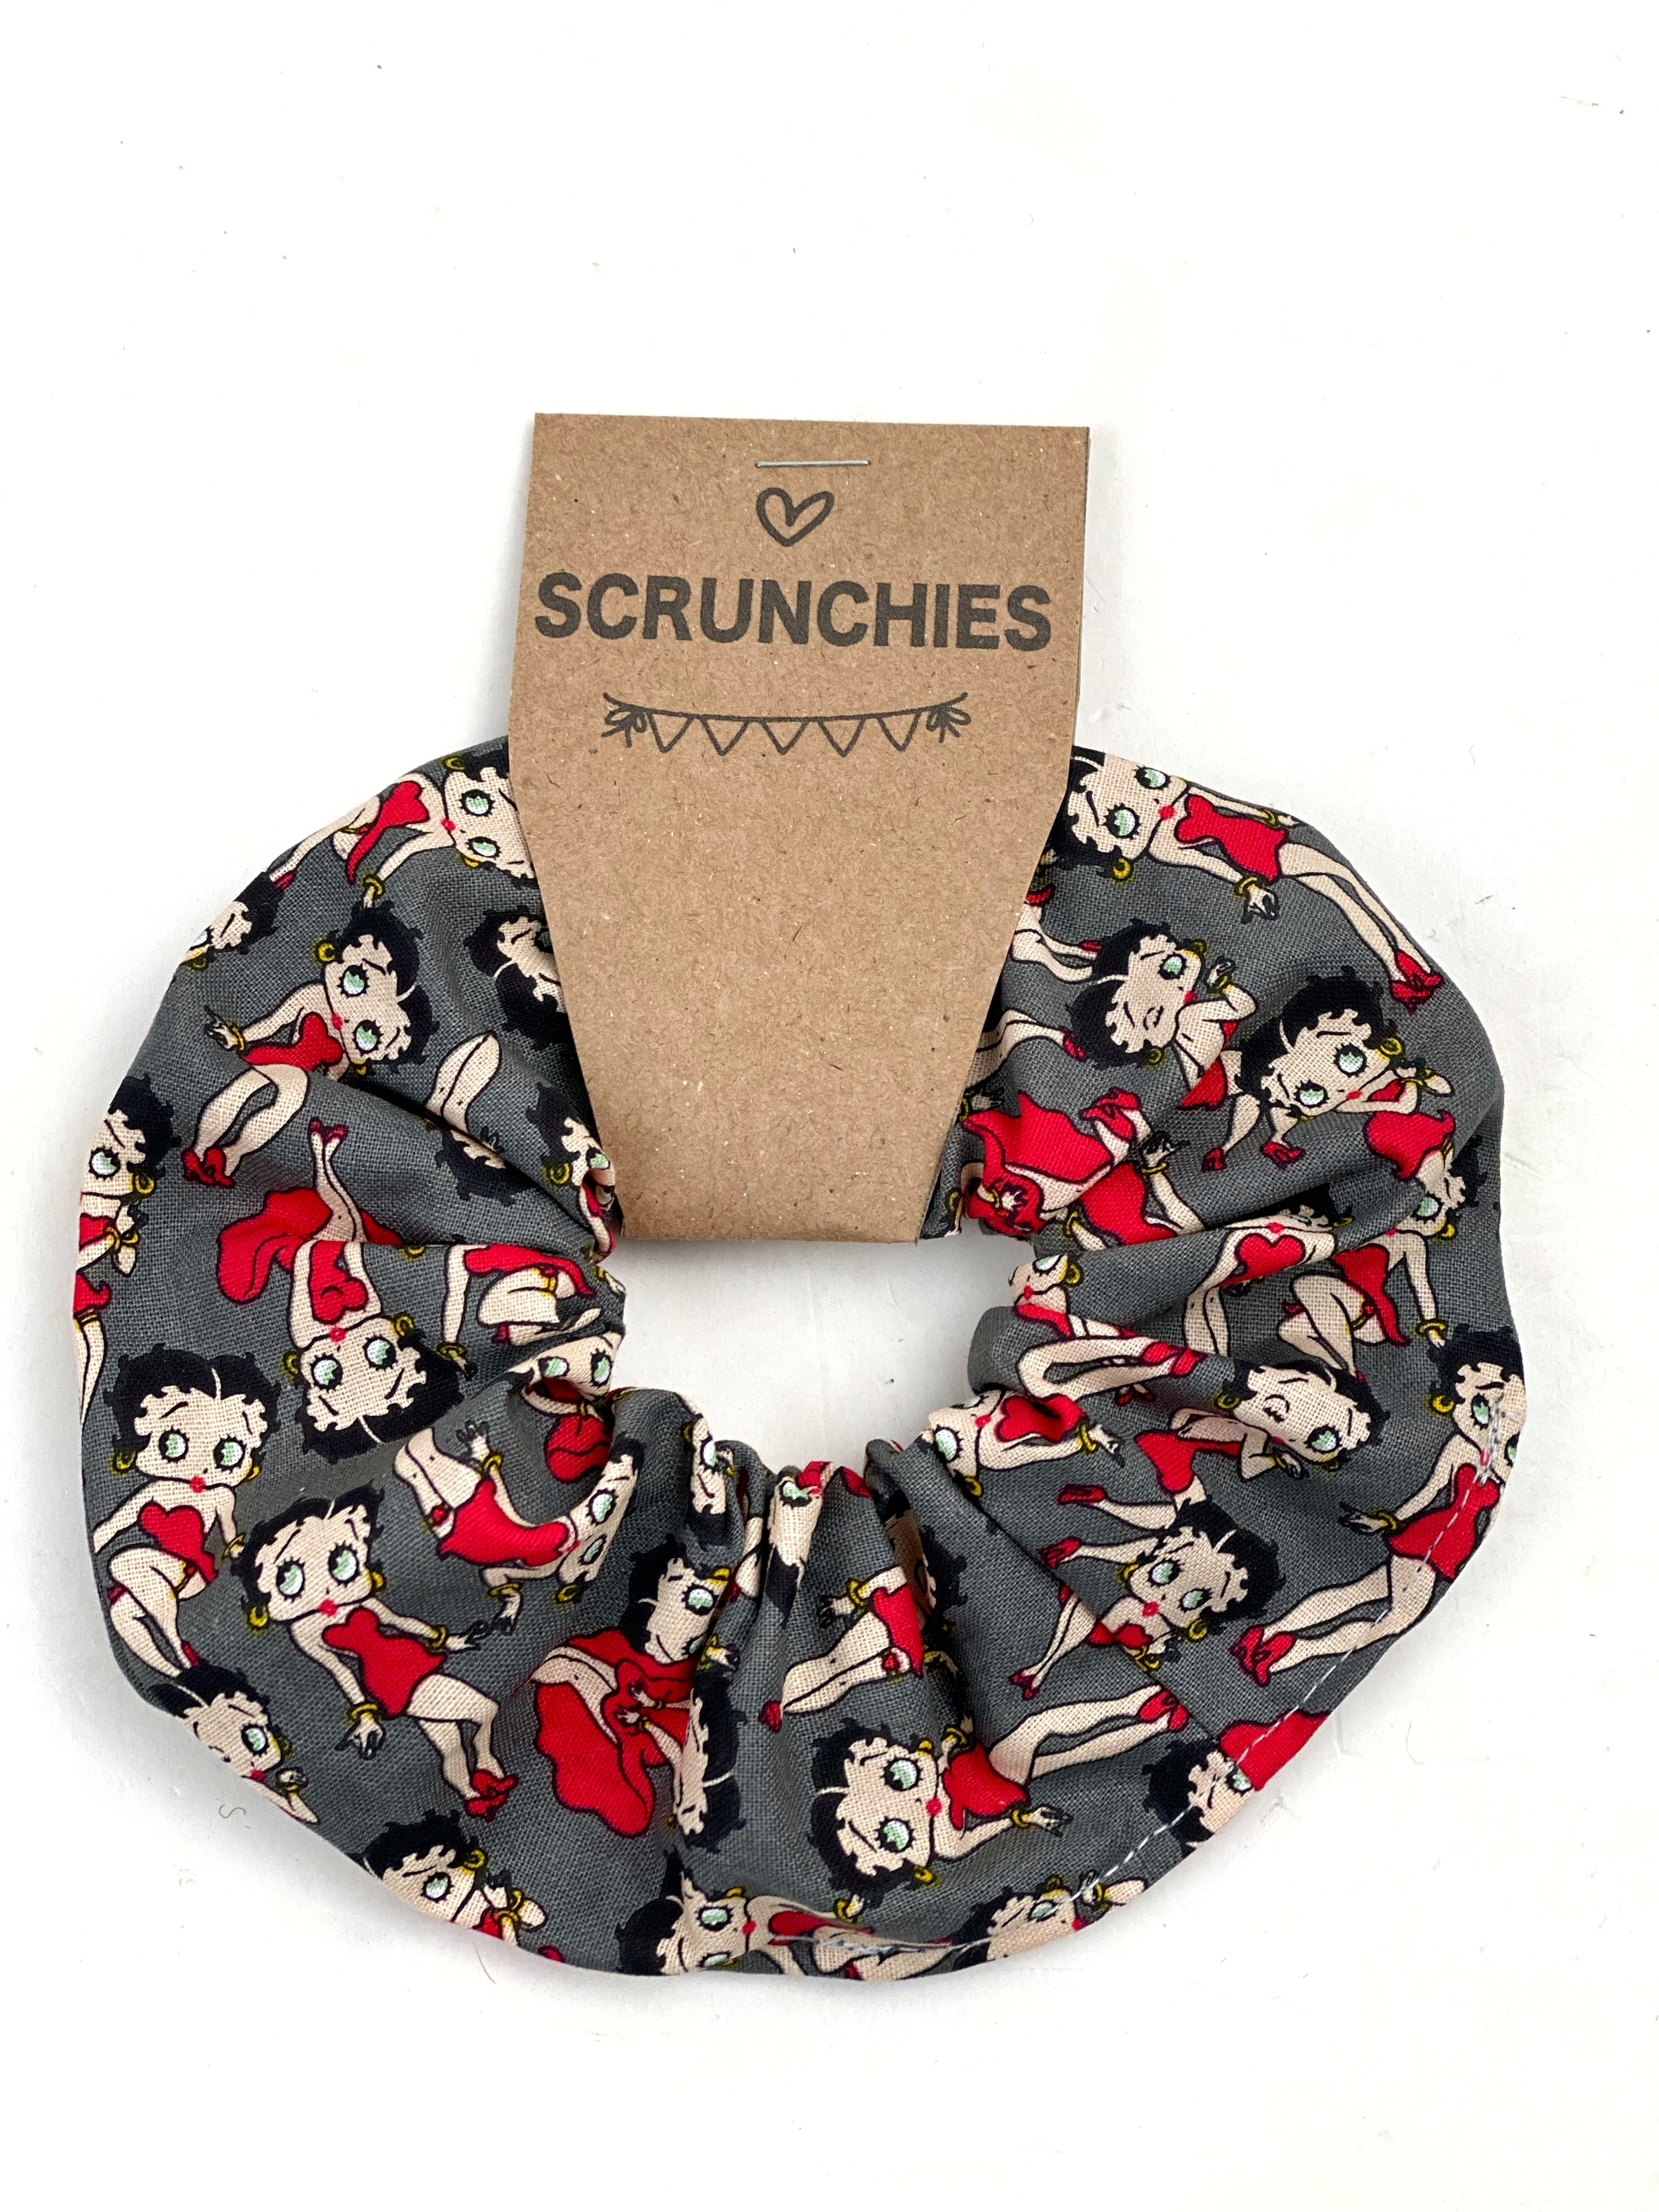 Betty Boop Fabric Hair Scrunchie 100% Cotton, Painted Barn Wood Fabric Scrunchies, Ponytail Holder, Handmade Scrunchie